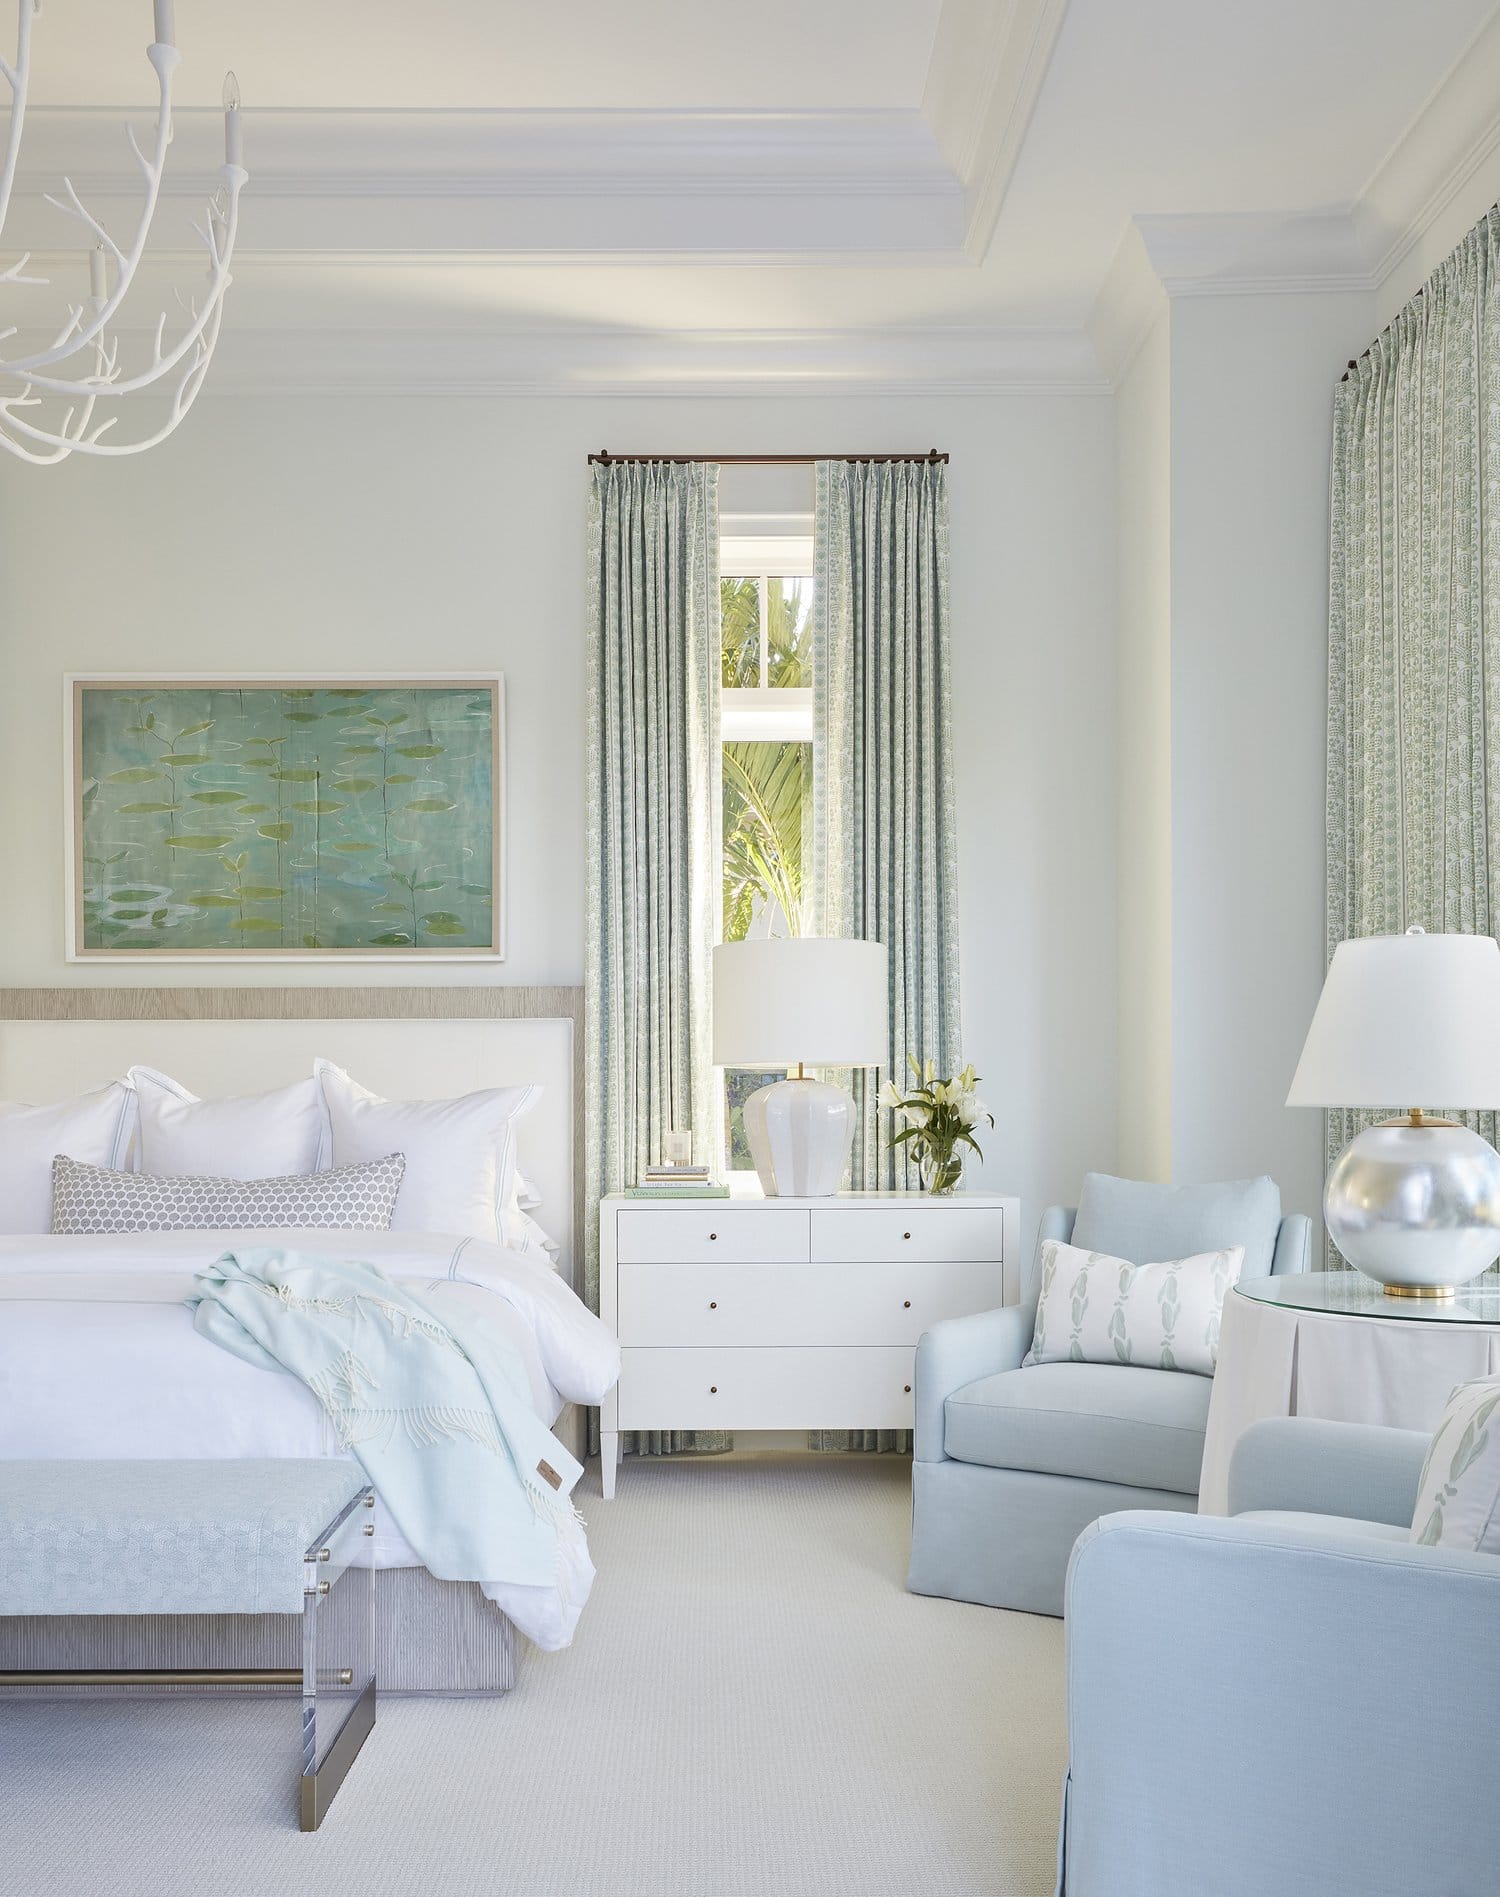 Joyful in Jupiter- bathroom design - interior design - beach house - beach house design - Kara Miller Interiors - Brantley Photography - bedroom - bedroom decor - blue and white